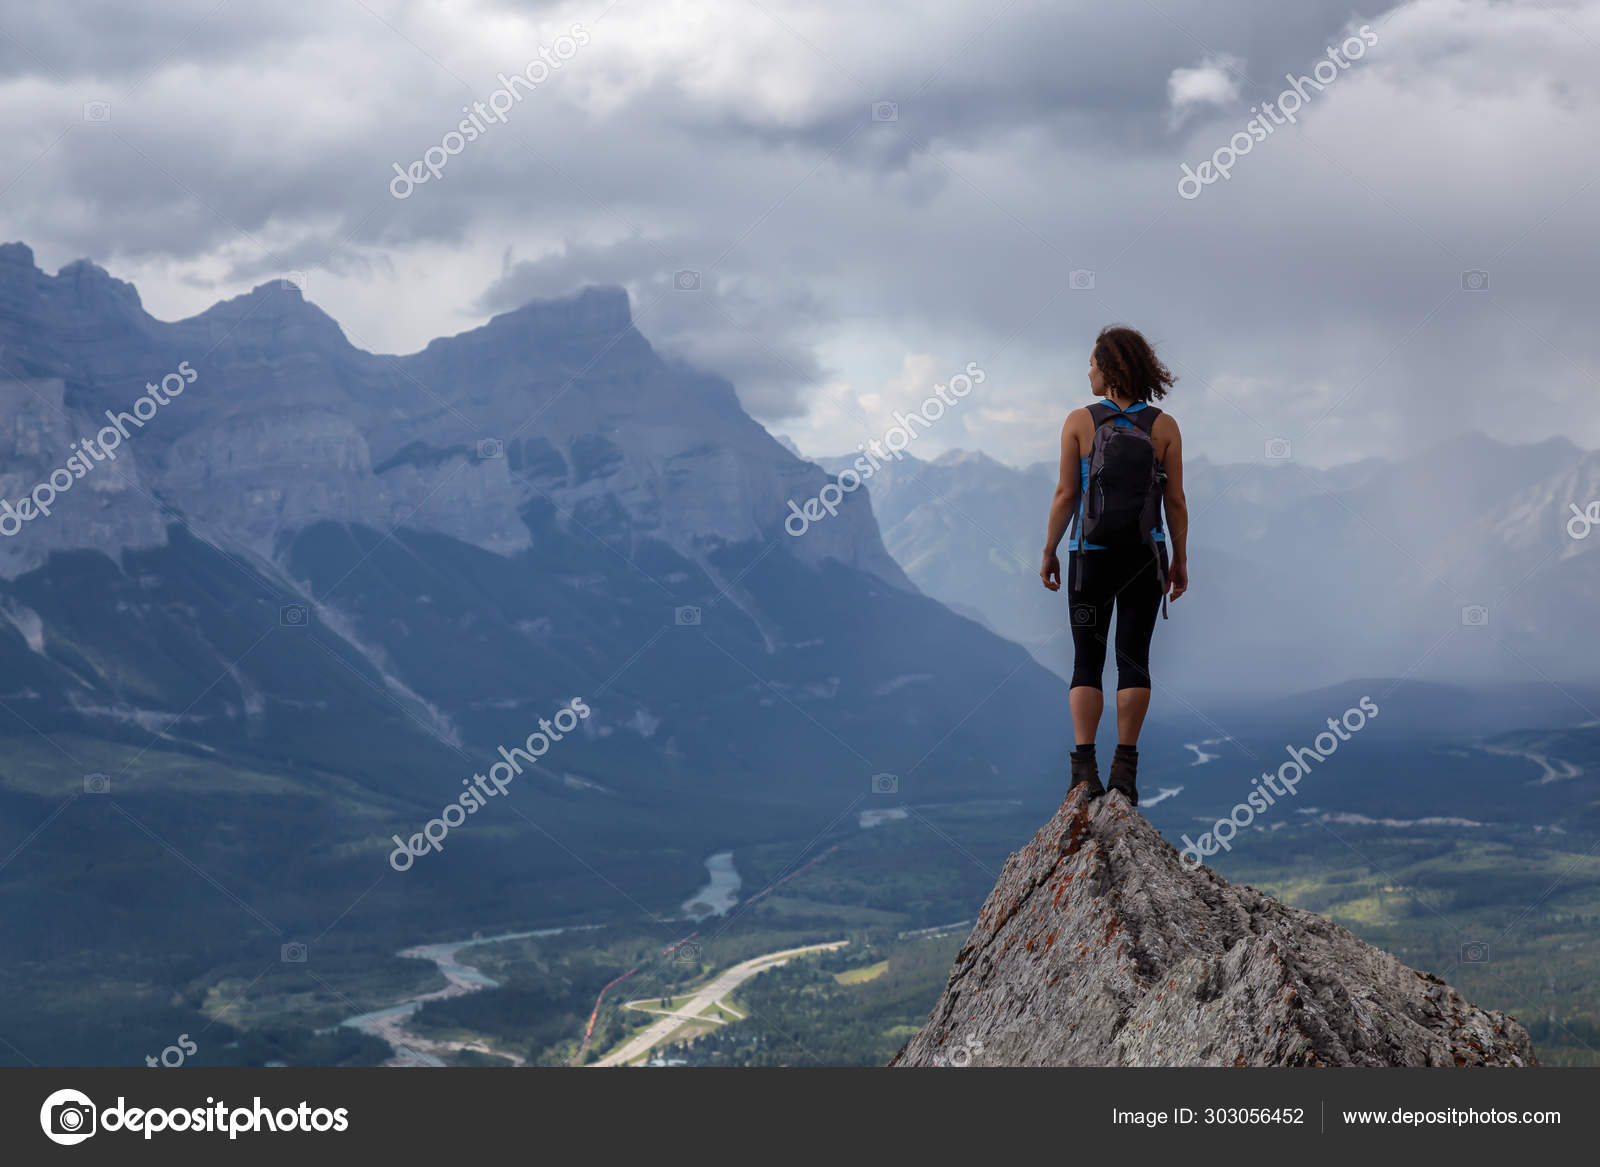 Up - Hiking Lady